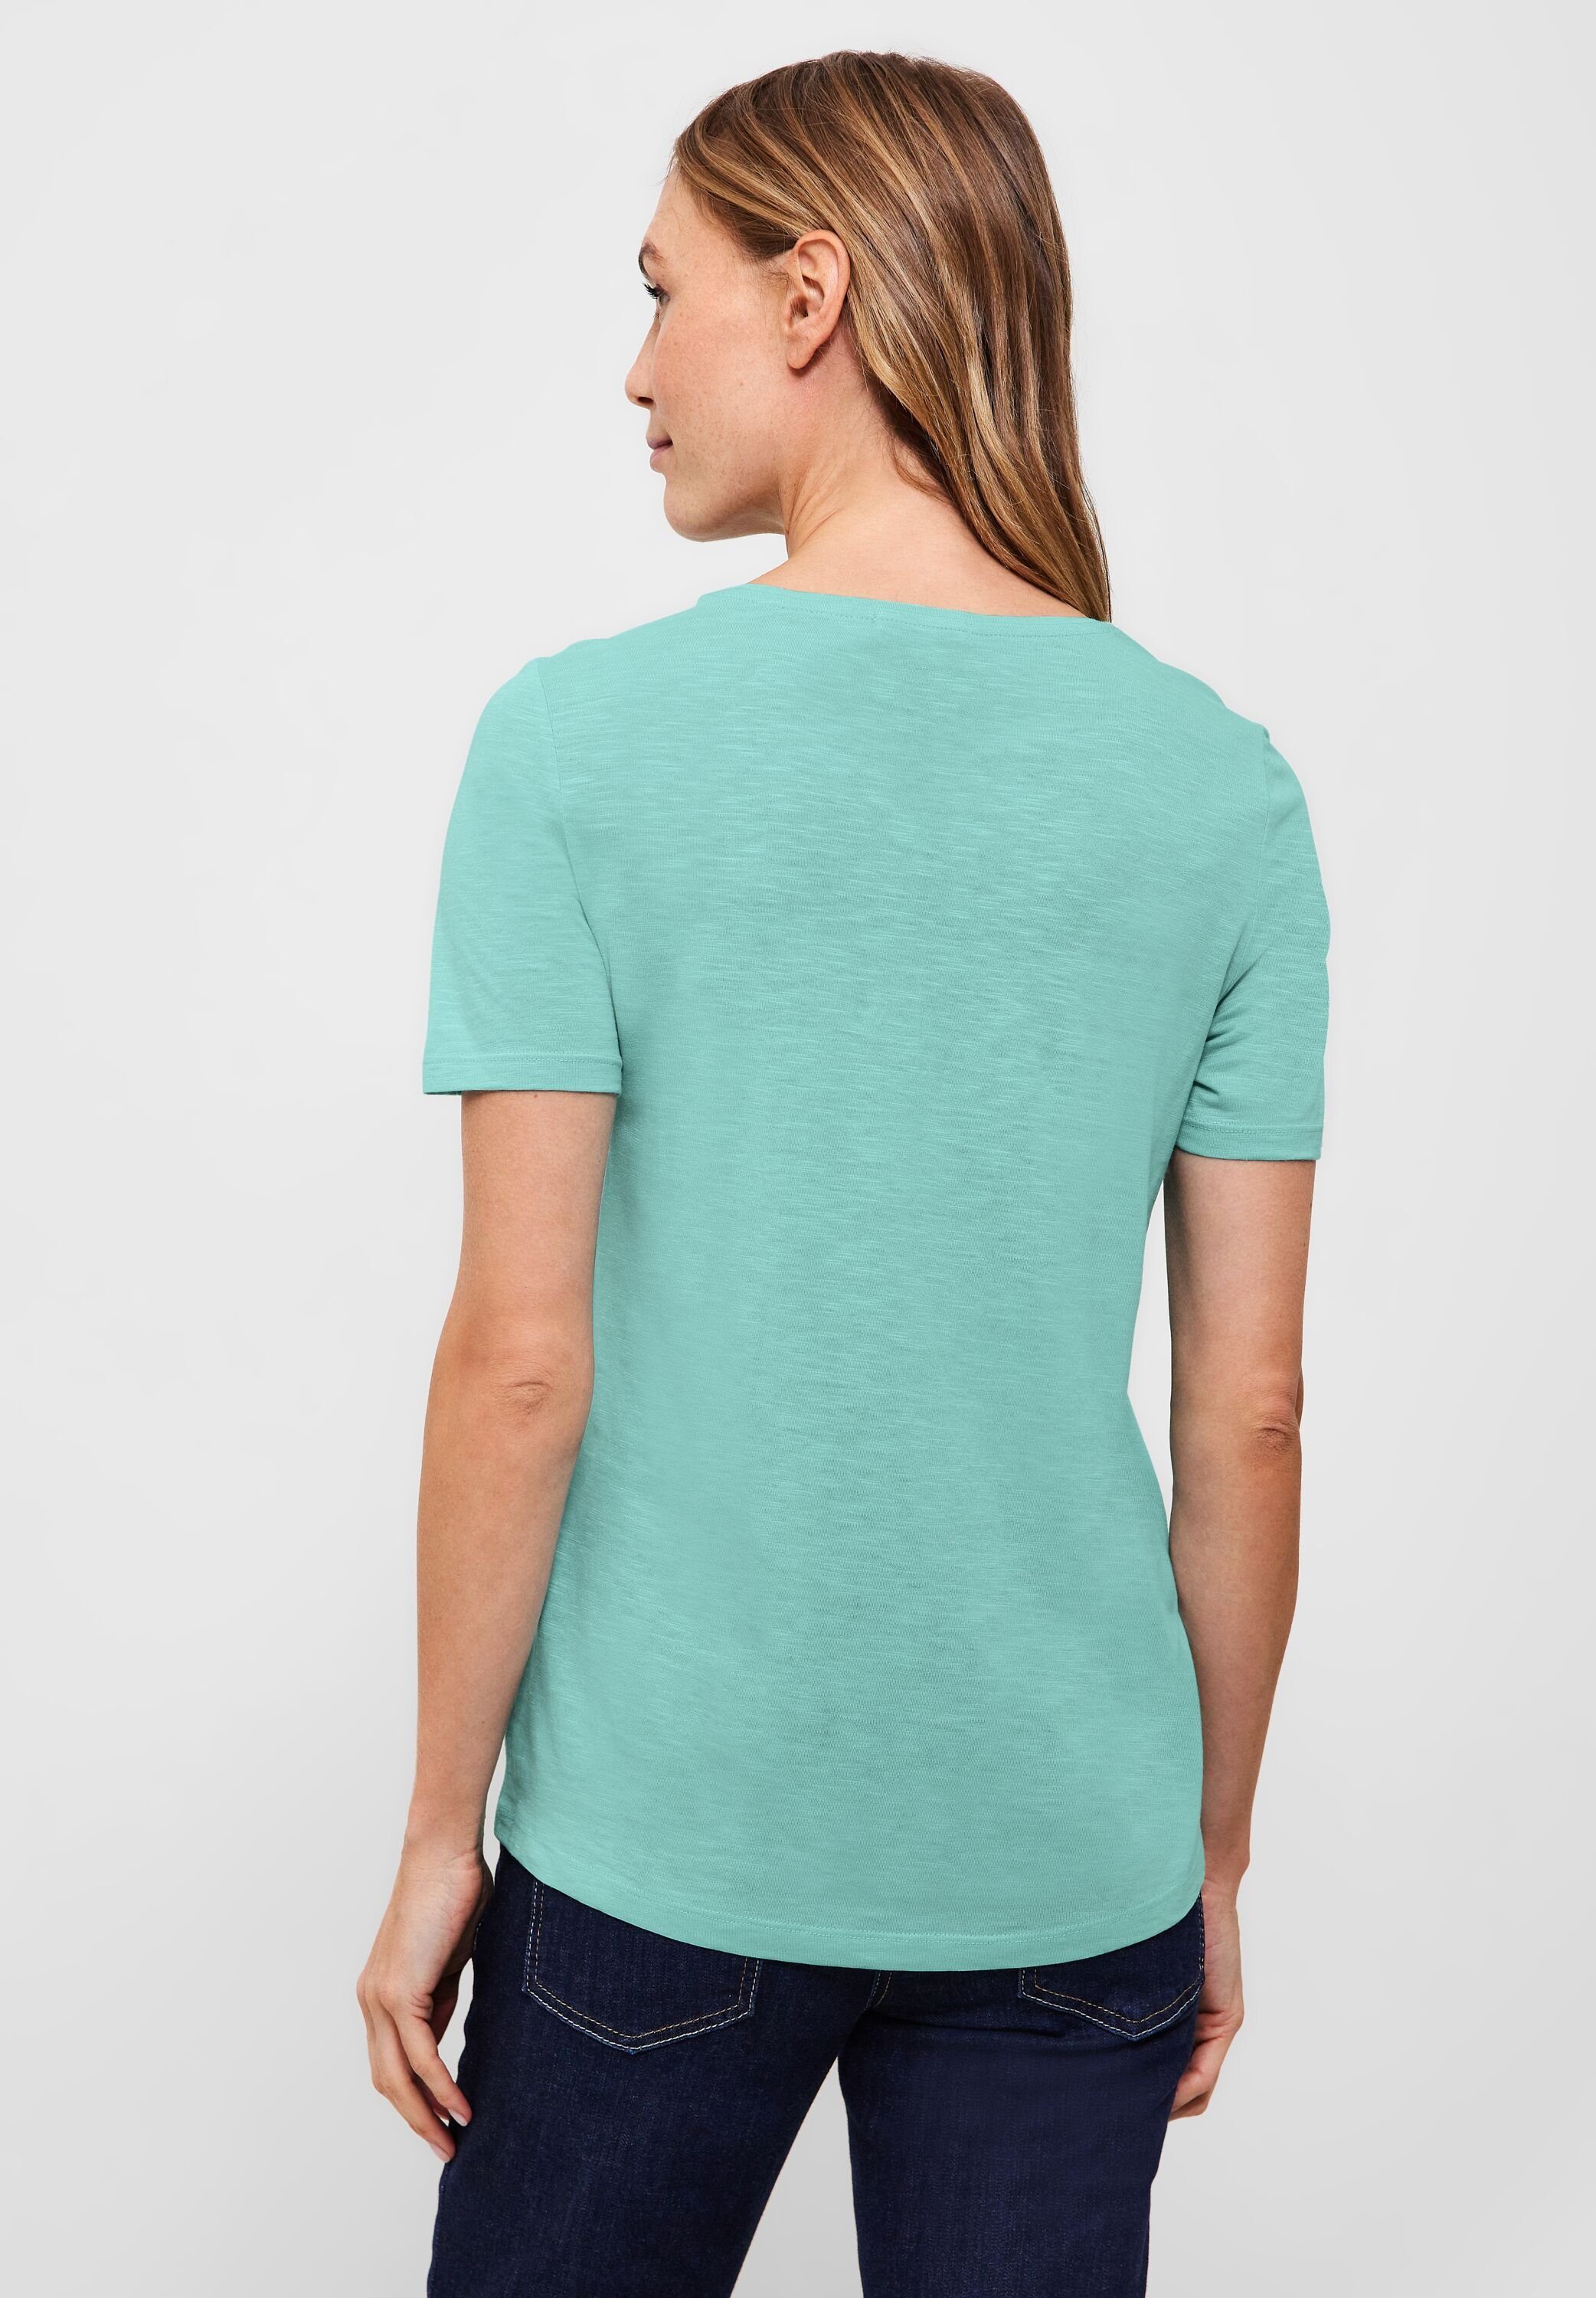 mint green Baumwolle cool aus Cecil reiner T-Shirt